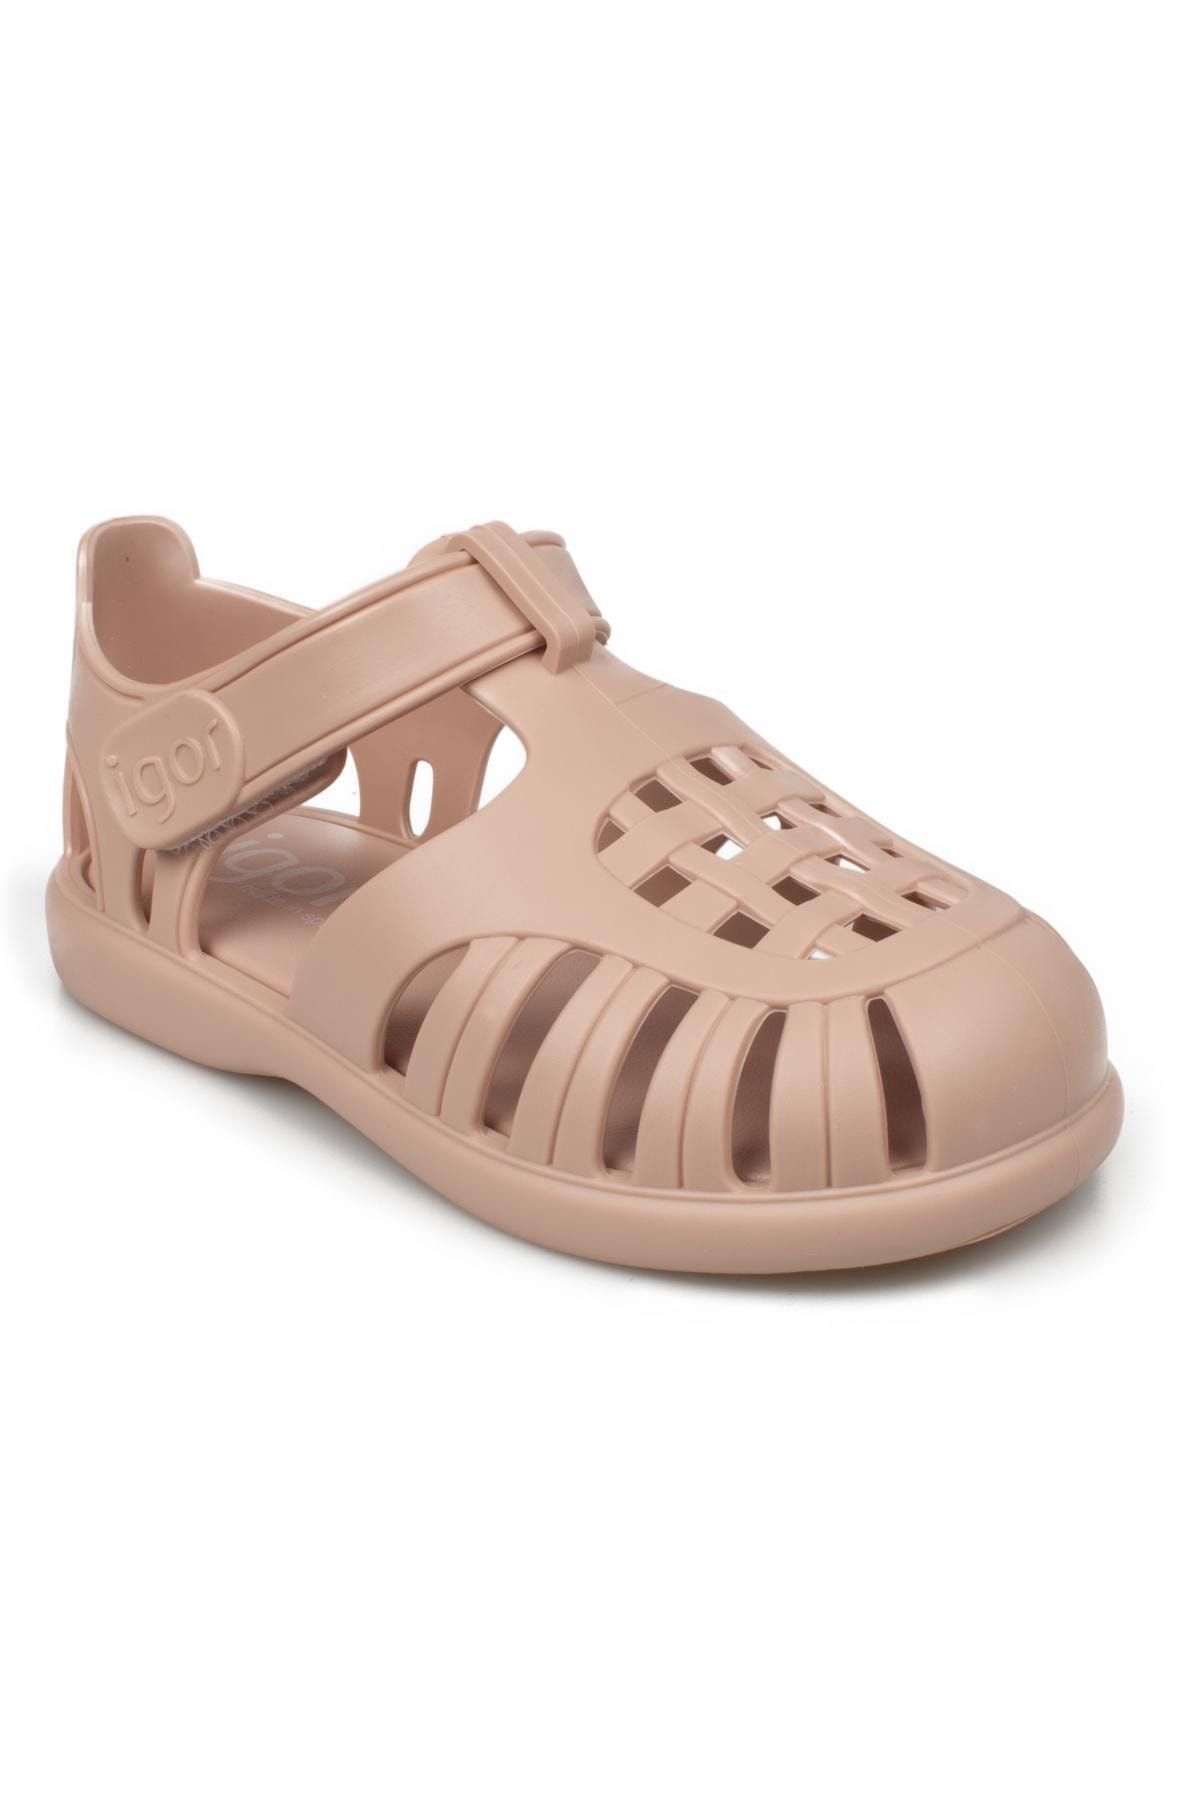 IGOR 10271 K Tobby Solid Çocuk Sandalet